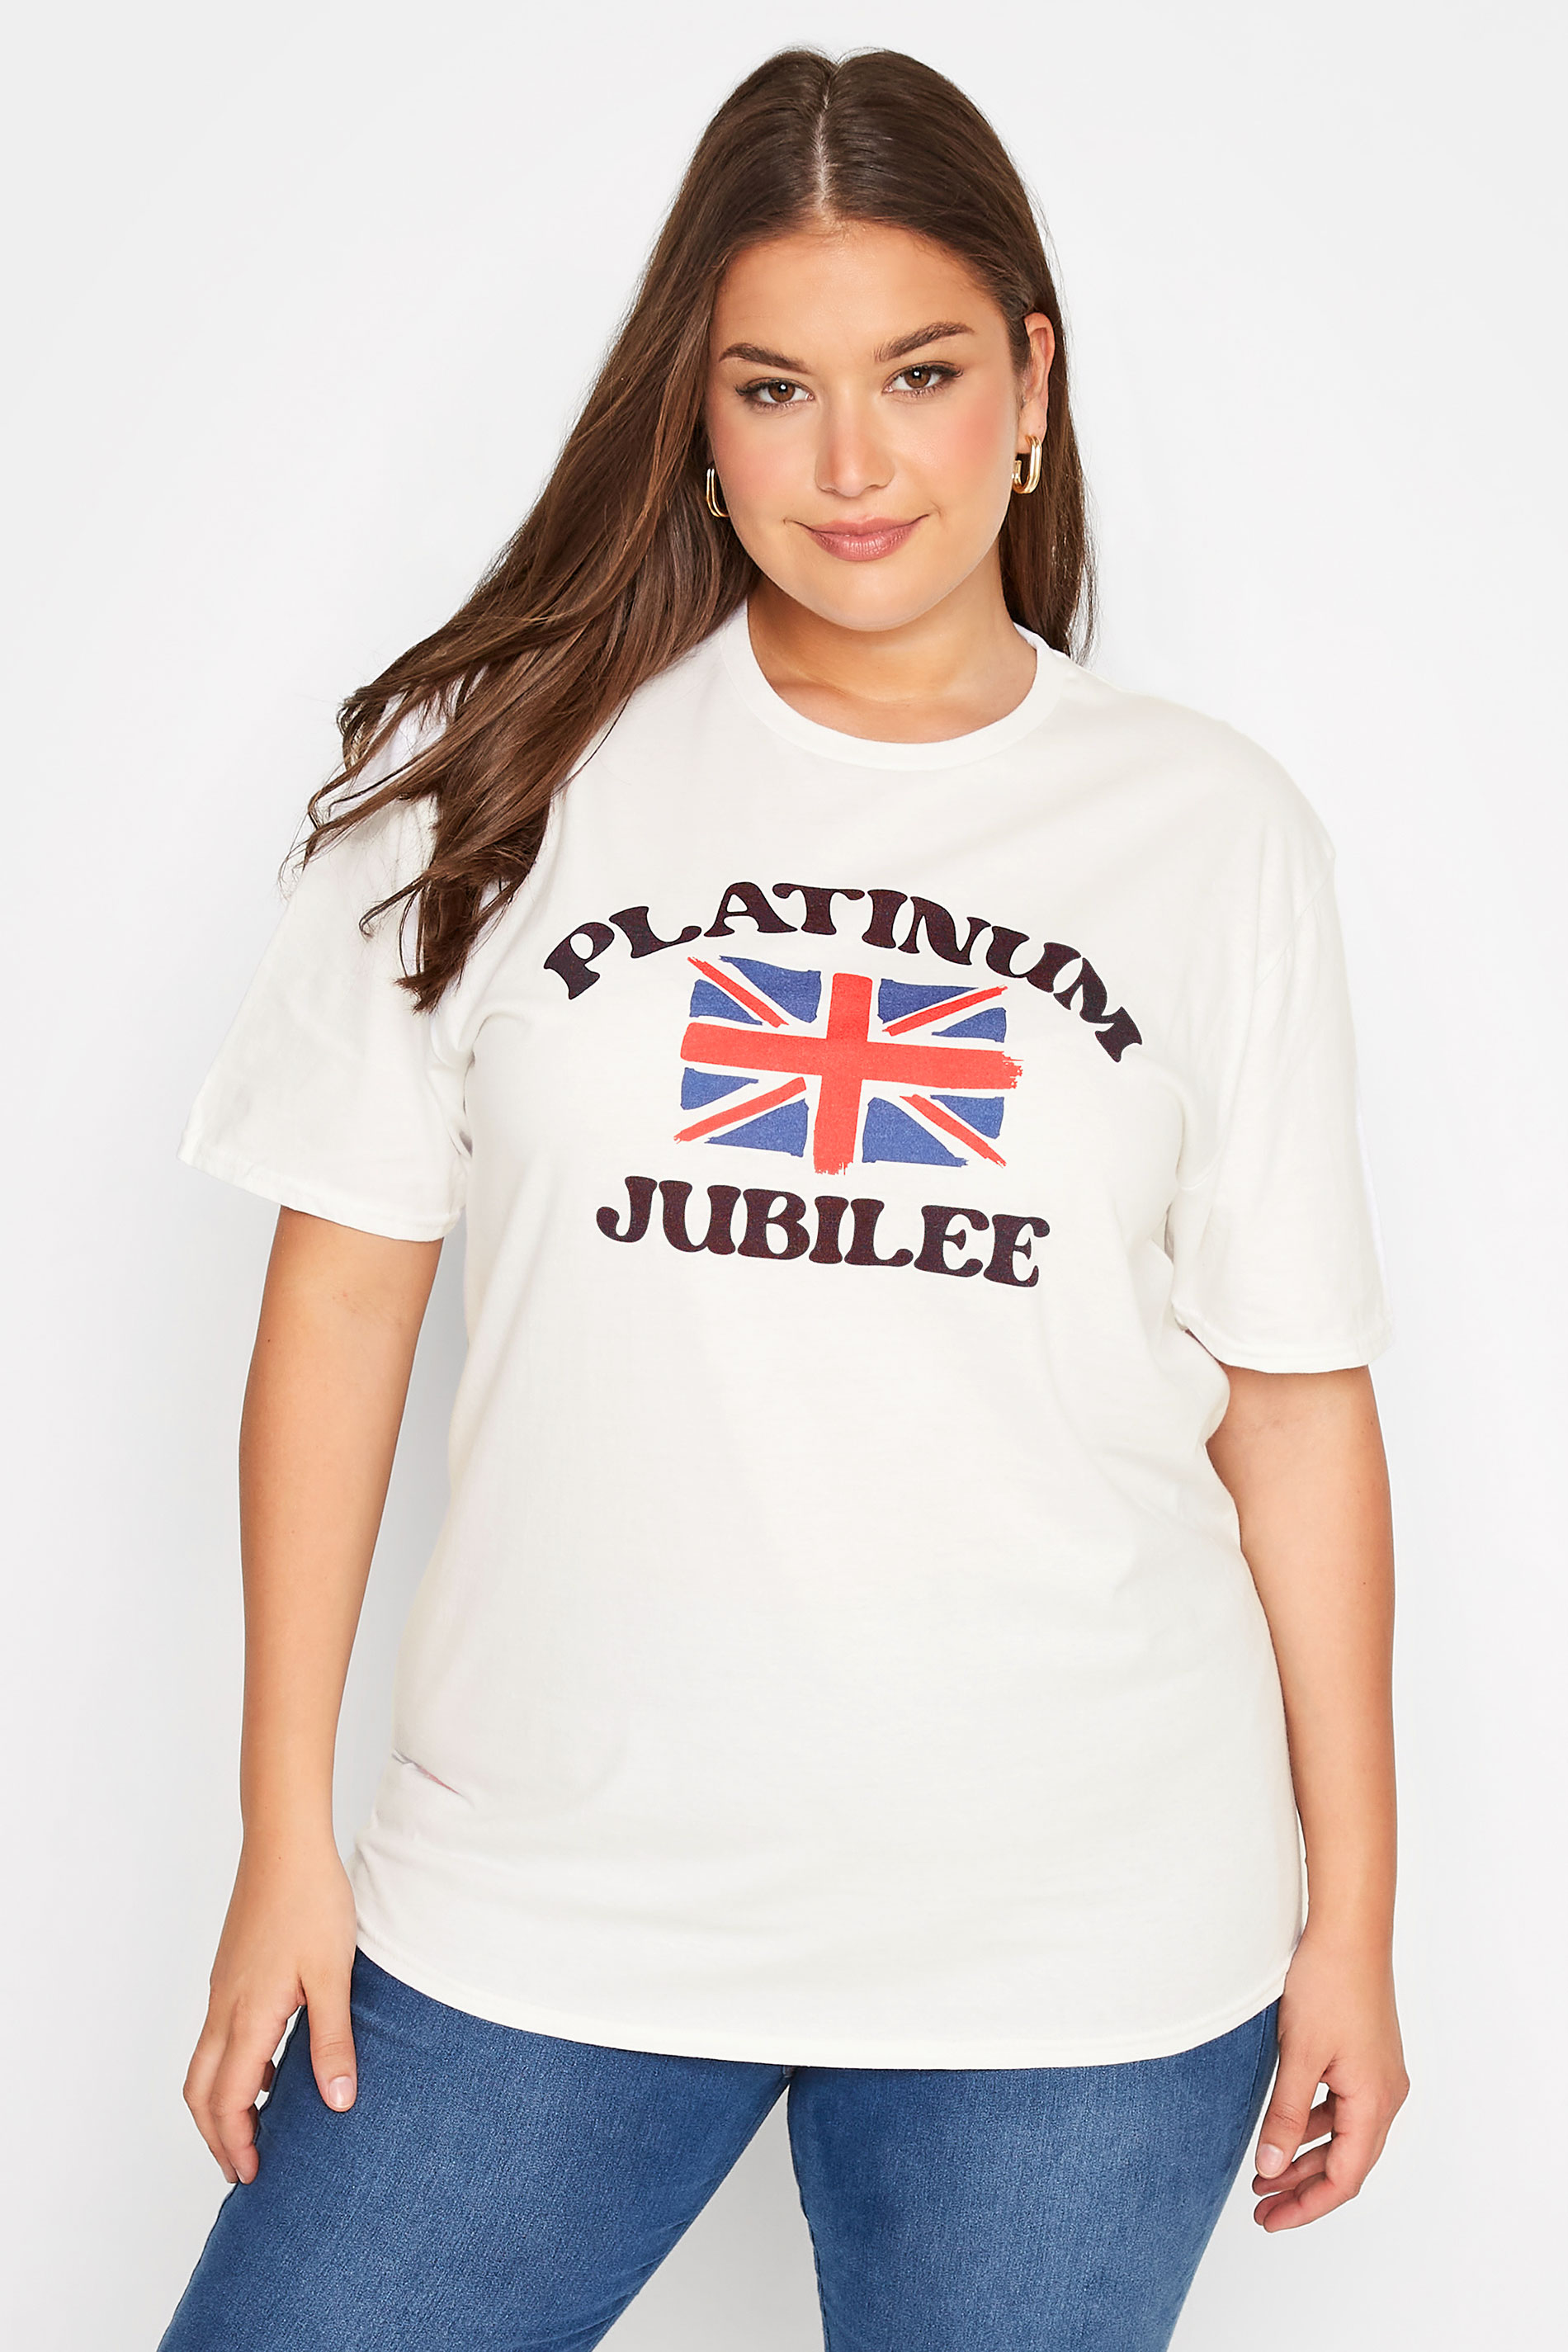 Grande taille  Tops Grande taille  T-Shirts | T-Shirt Blanc Drapeau 'Platinum Jubilee' - VF84175